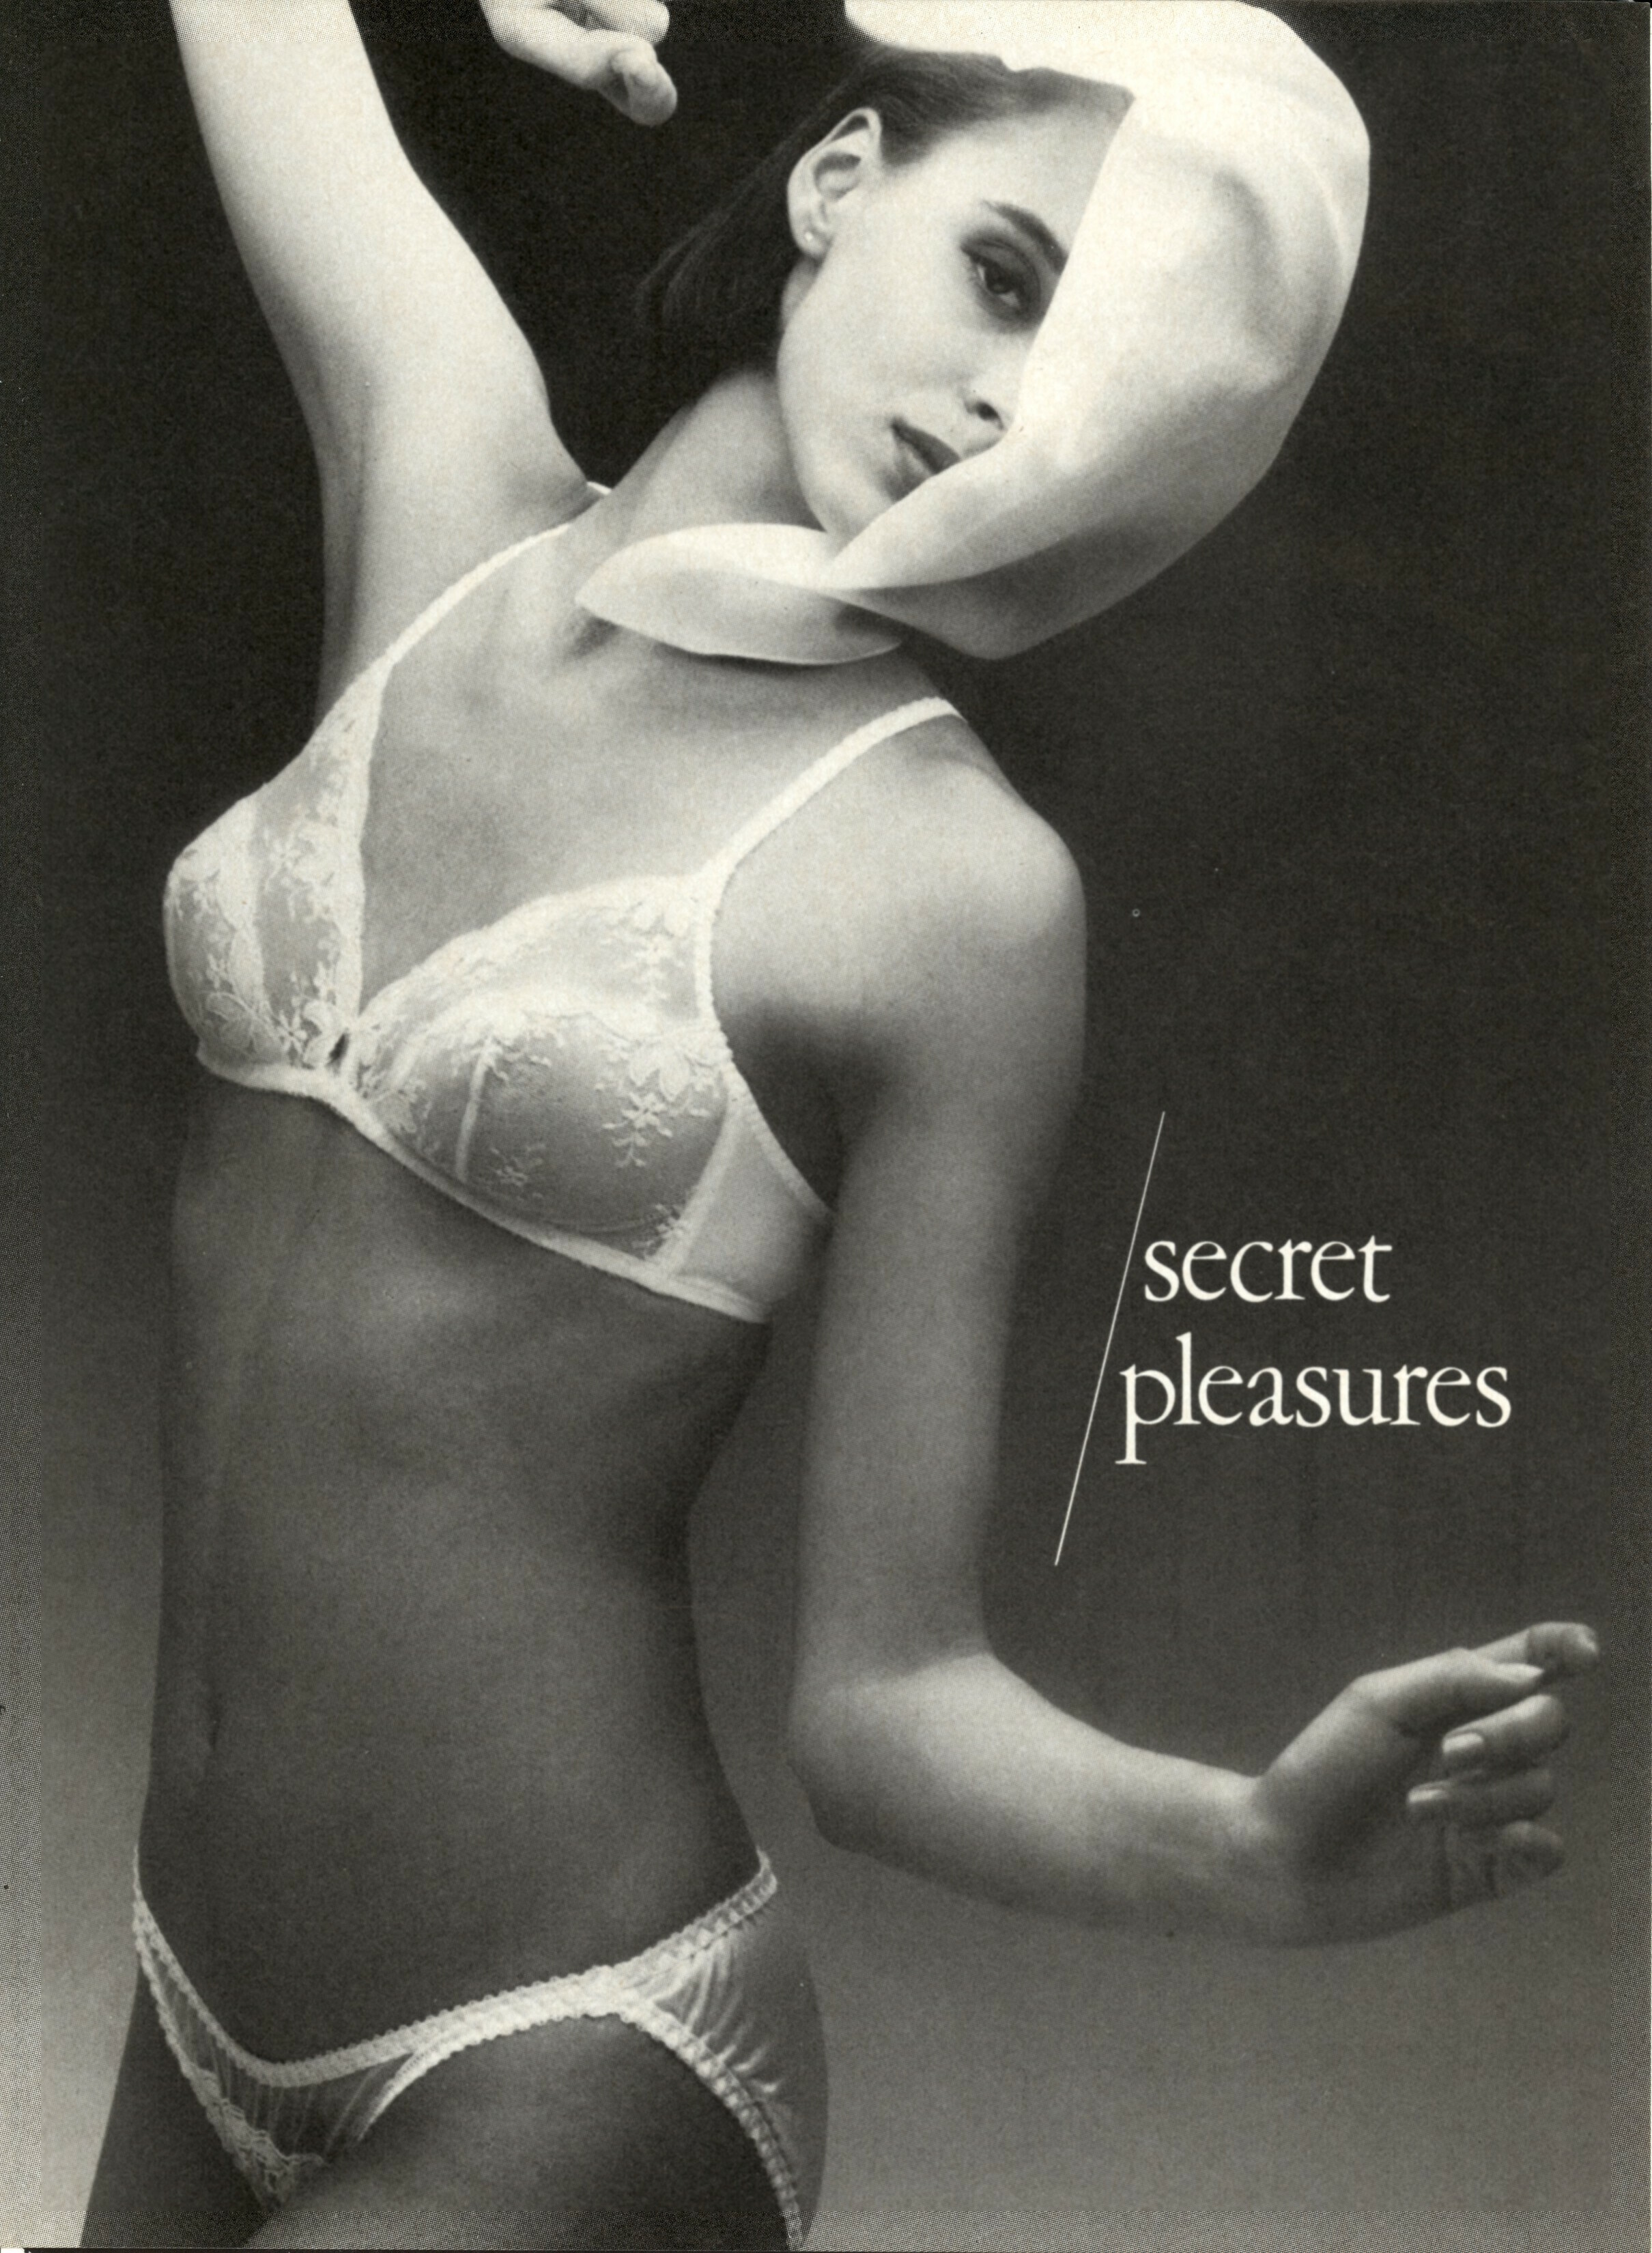 Secrets of pleasure